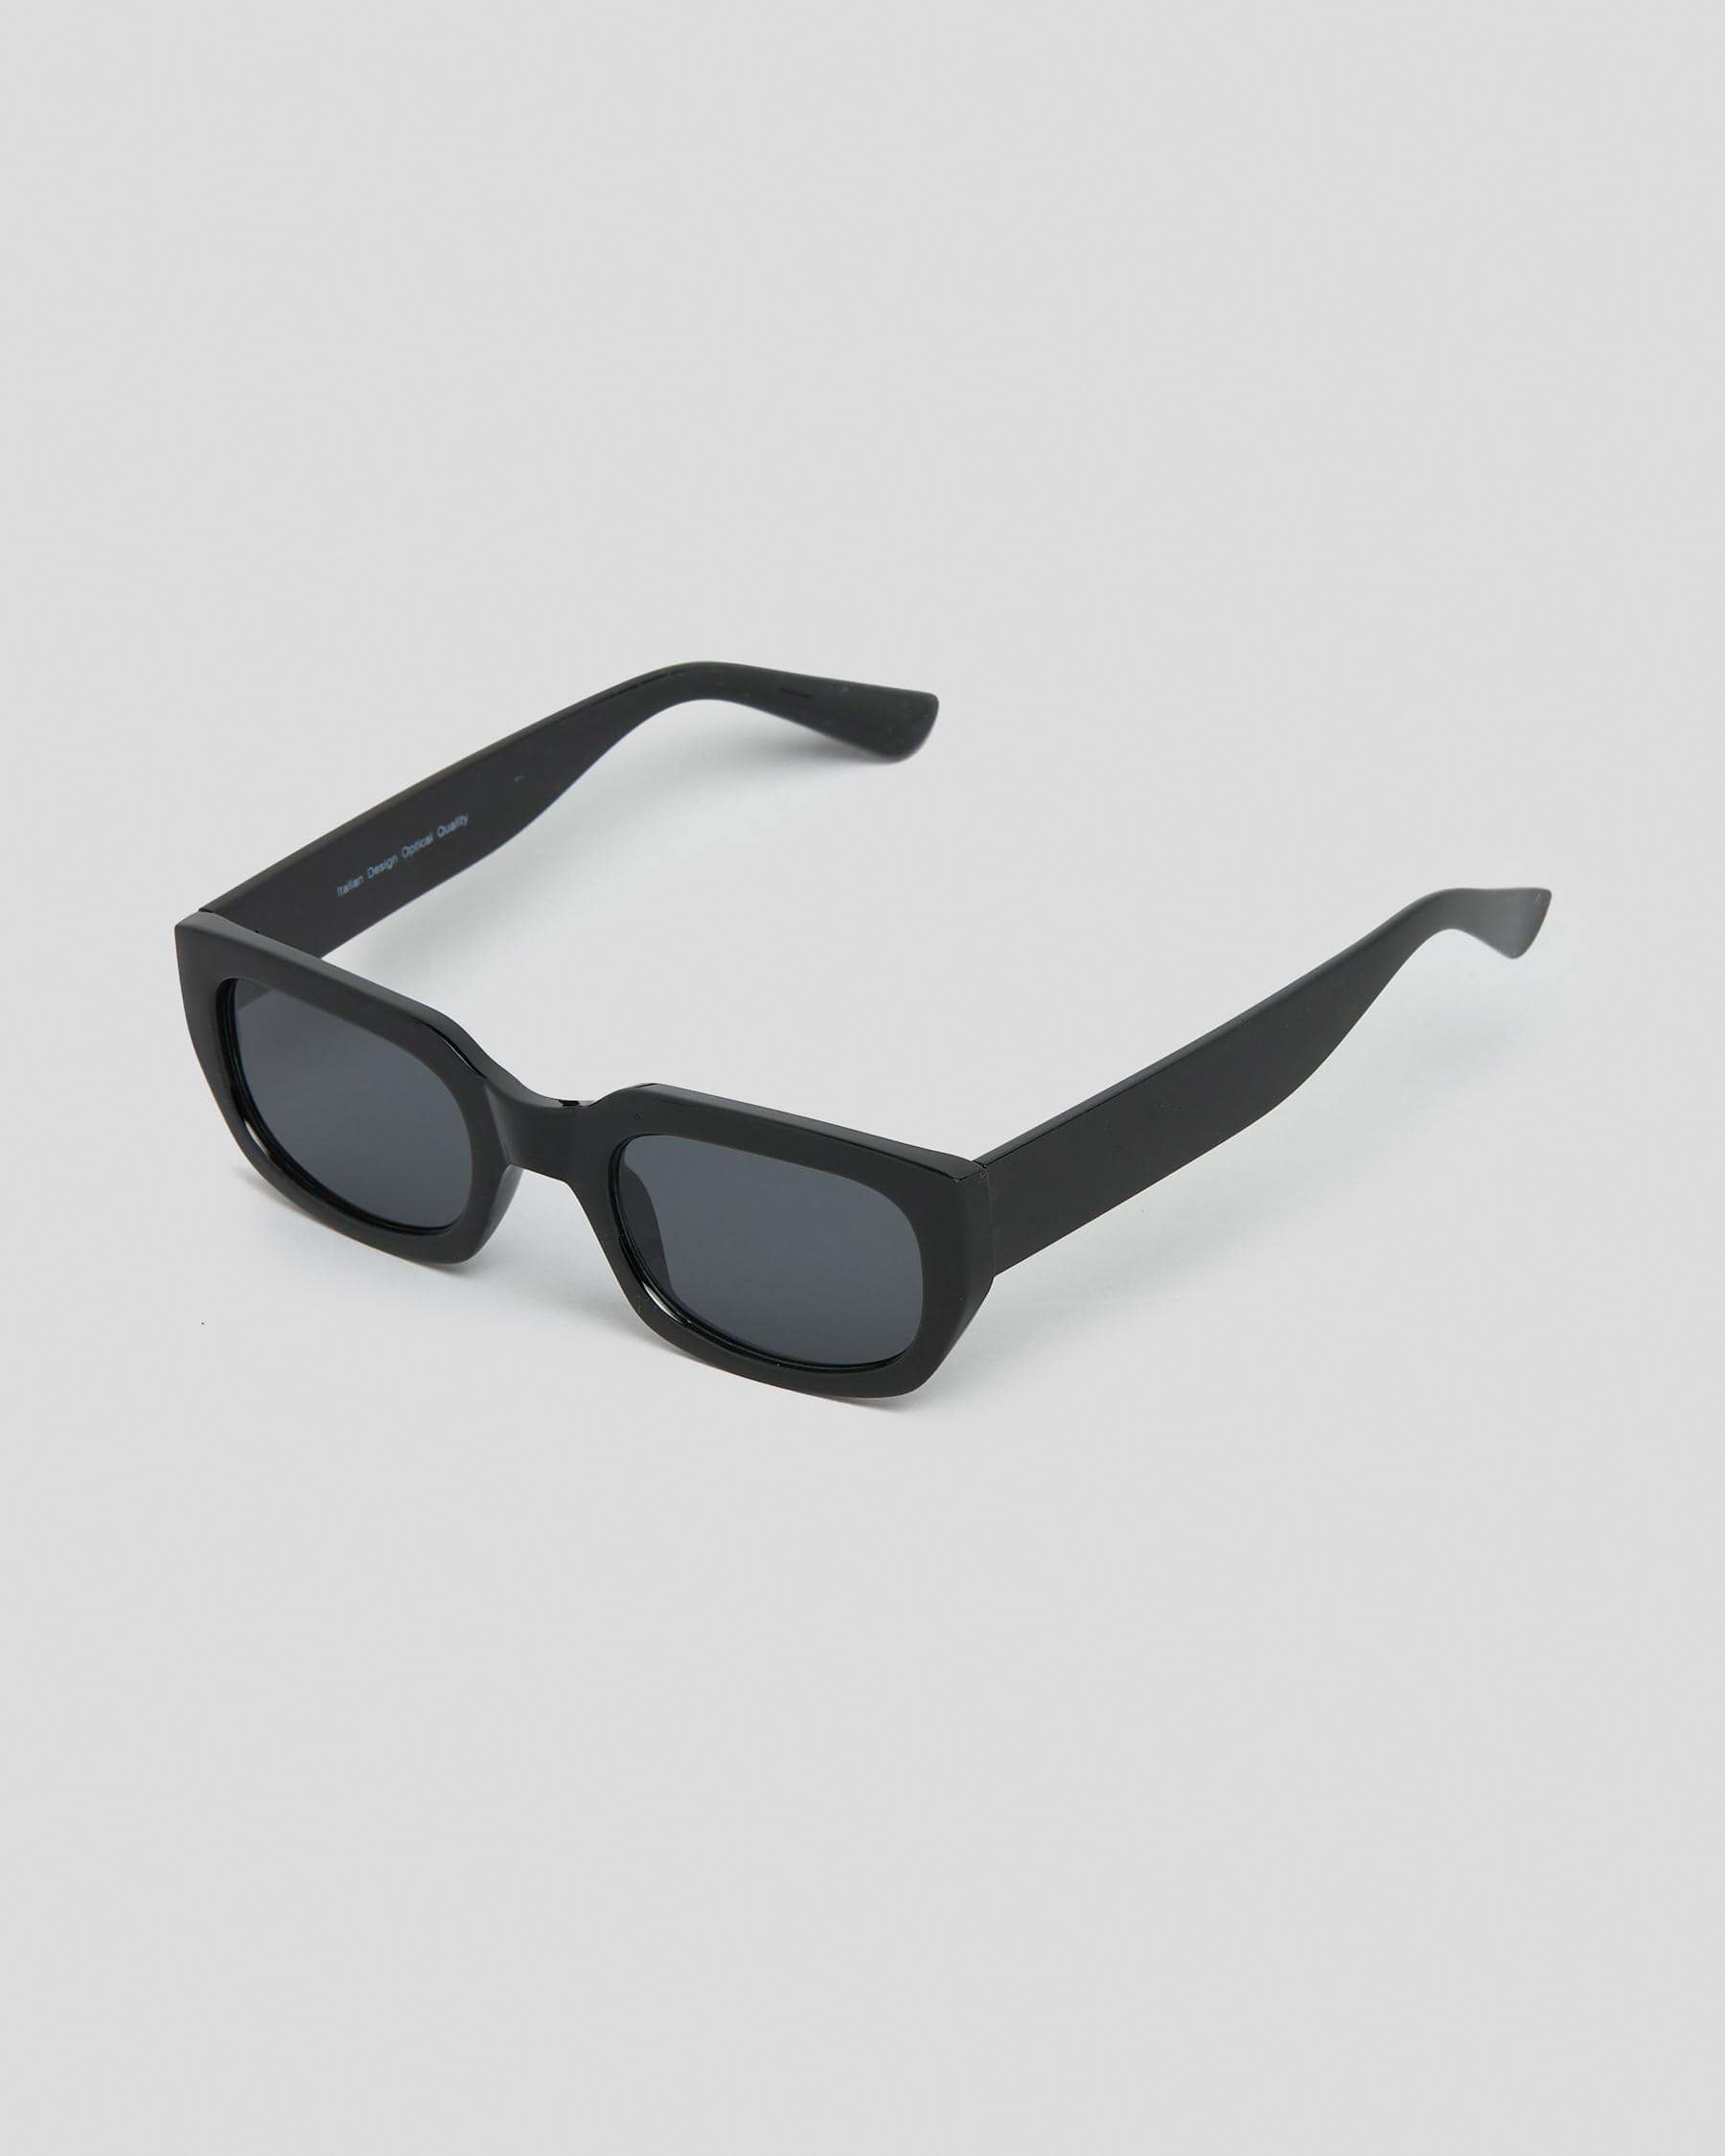 Indie Eyewear Kauai Sunglasses In Black/black - Fast Shipping & Easy ...